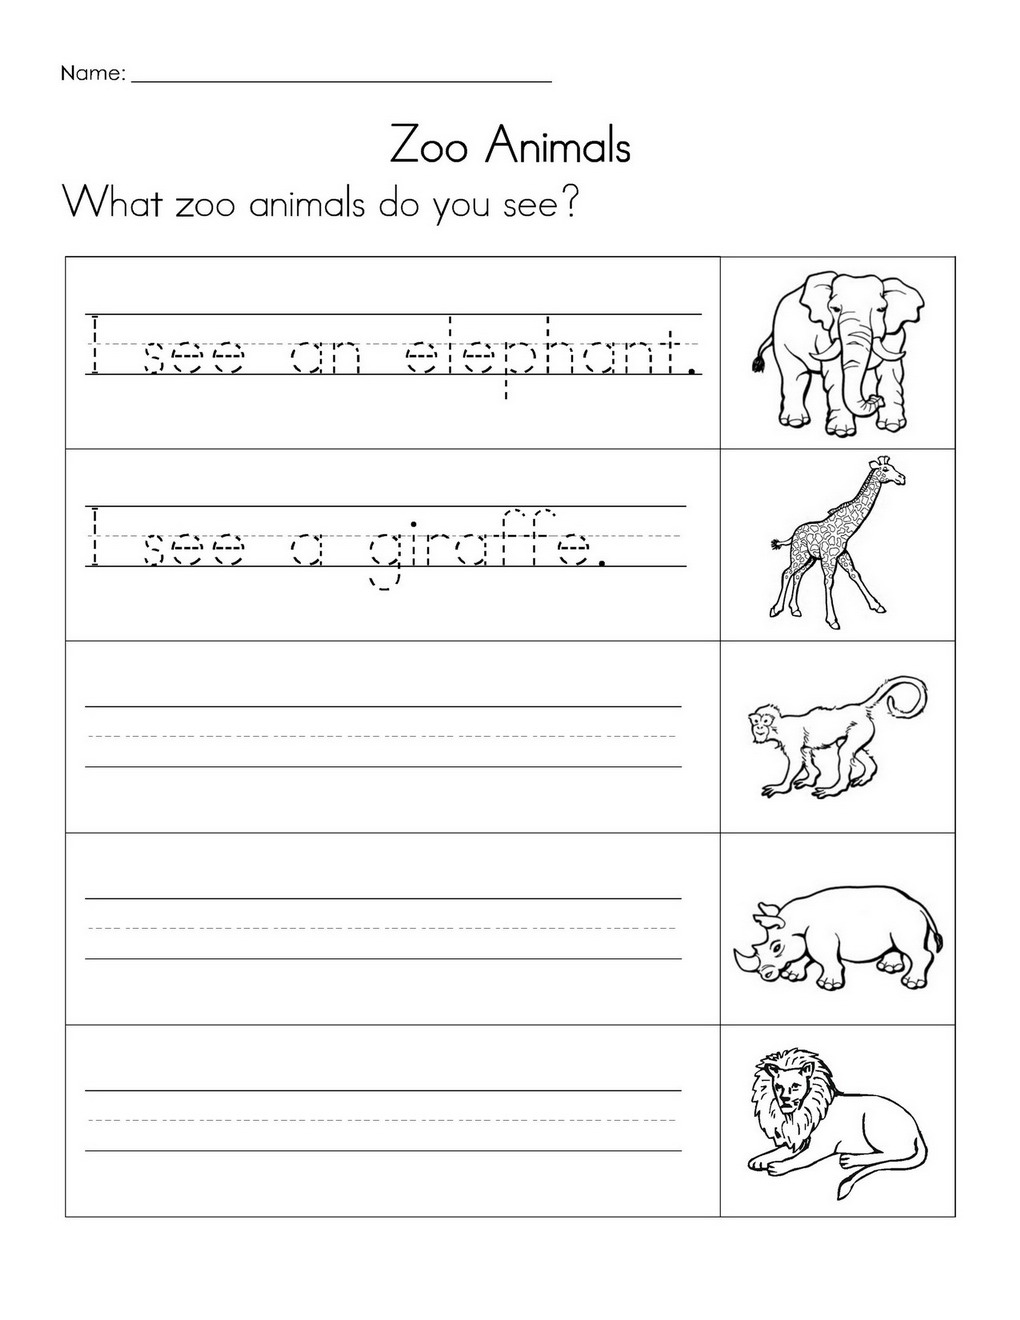 12-best-images-of-tracing-sentences-worksheets-reading-simple-sentence-kindergarten-writing